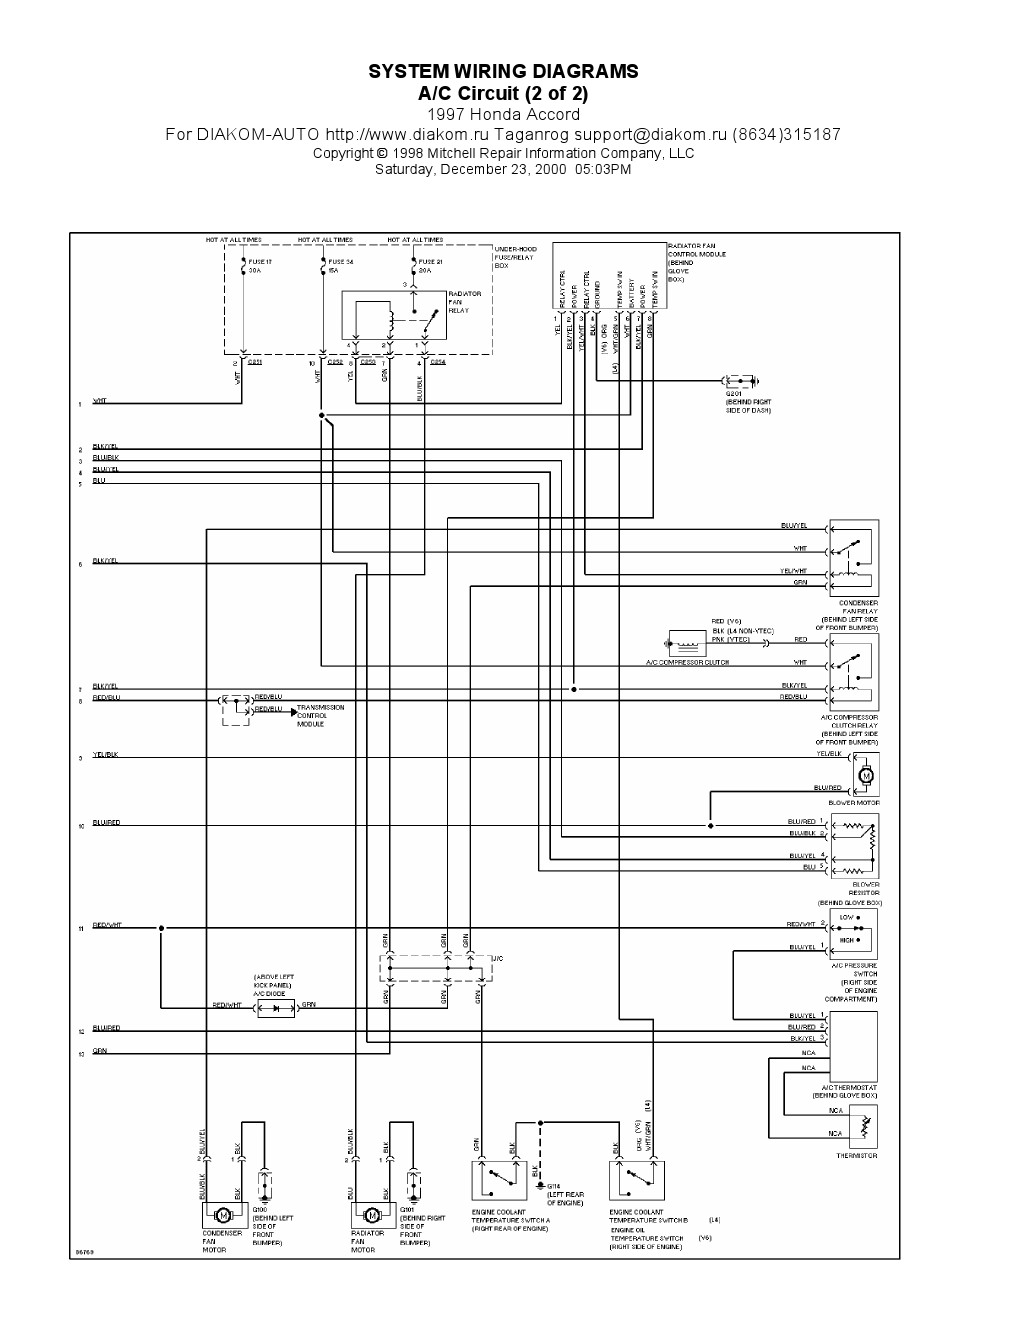 1996 Honda Accord Wiring Diagram from 4.bp.blogspot.com